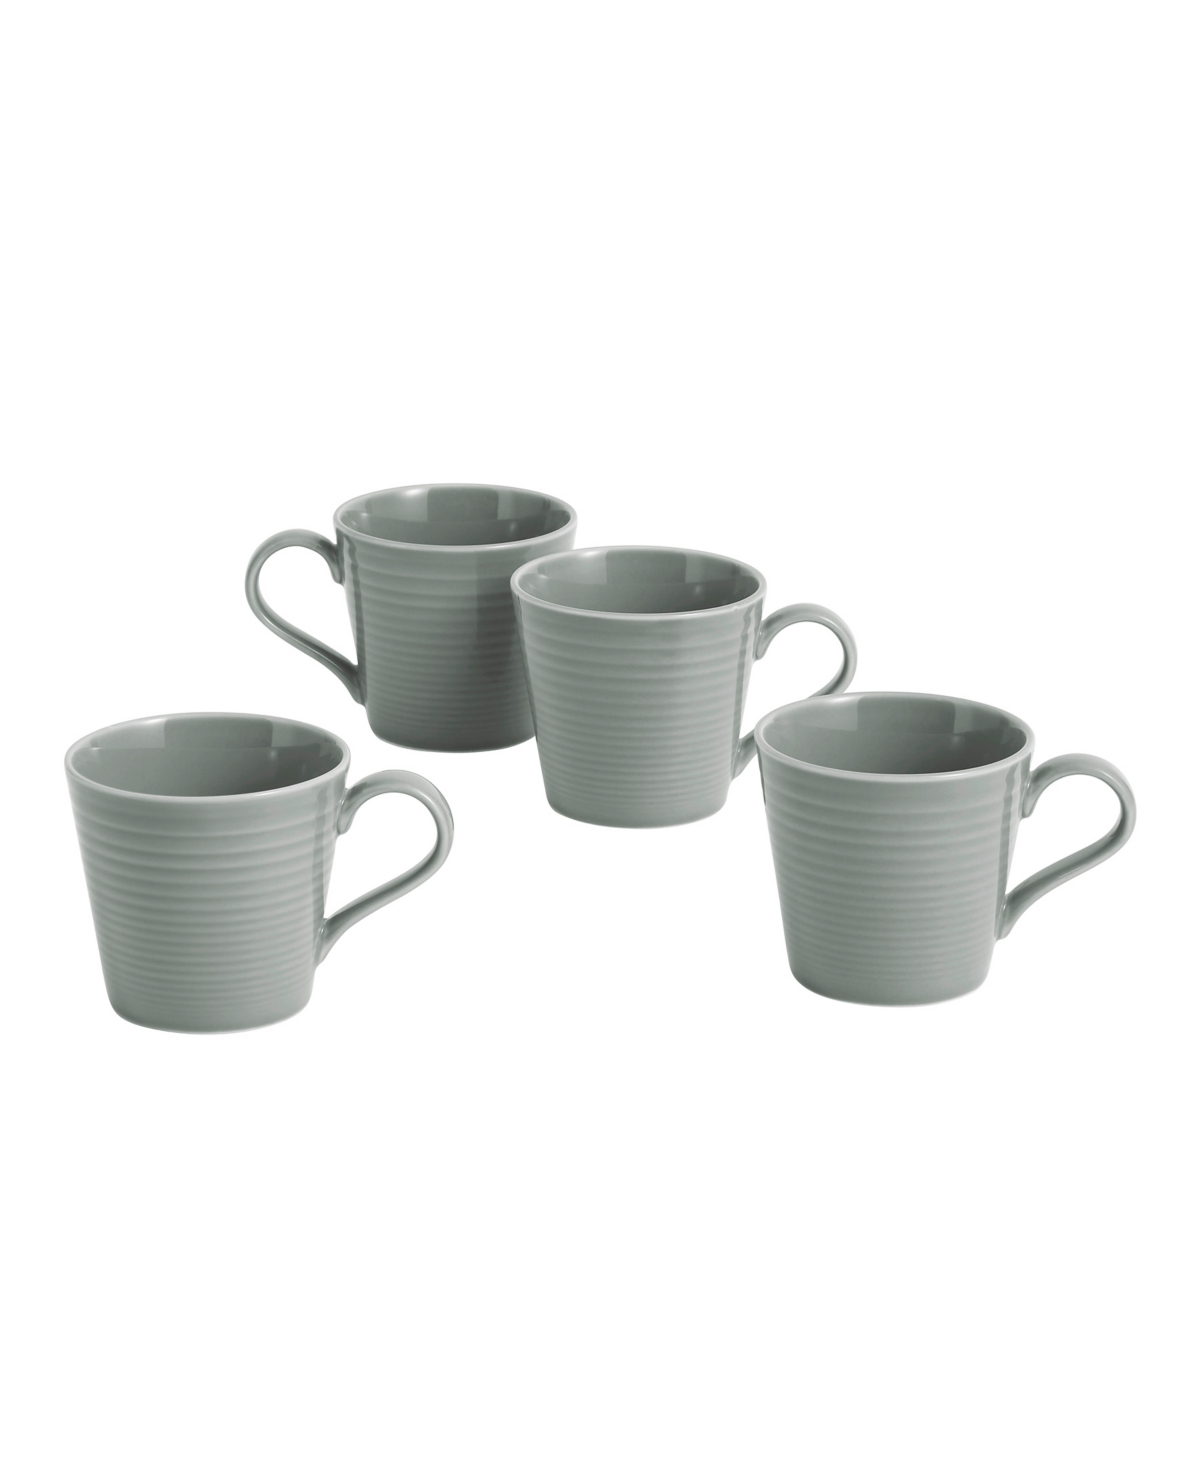 Gordon Ramsay Maze Mug, Set of 4, Service for 4 - Dark Gray